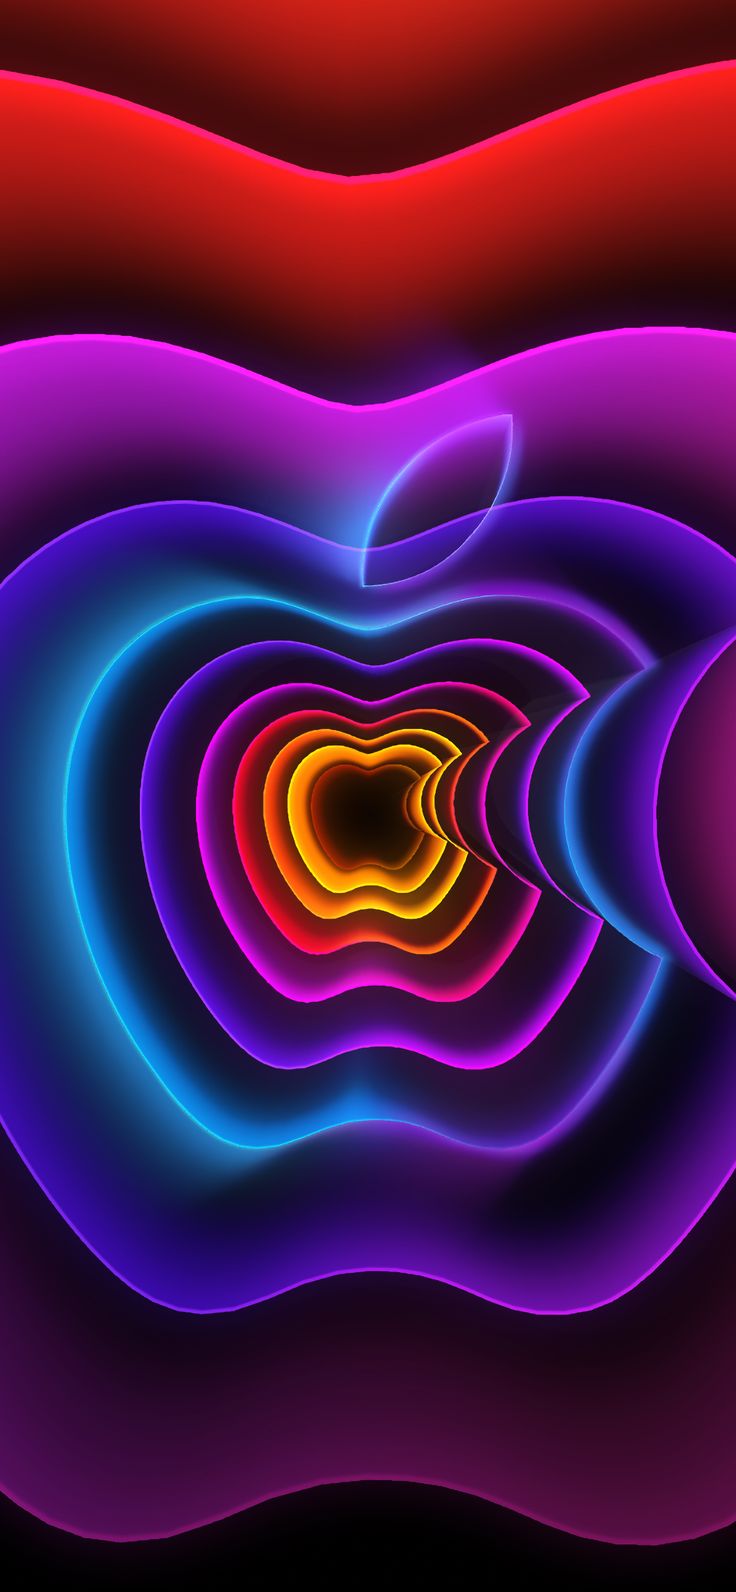 imagens lindas. Apple wallpaper, iPhone wallpaper logo, Apple wallpaper iphone